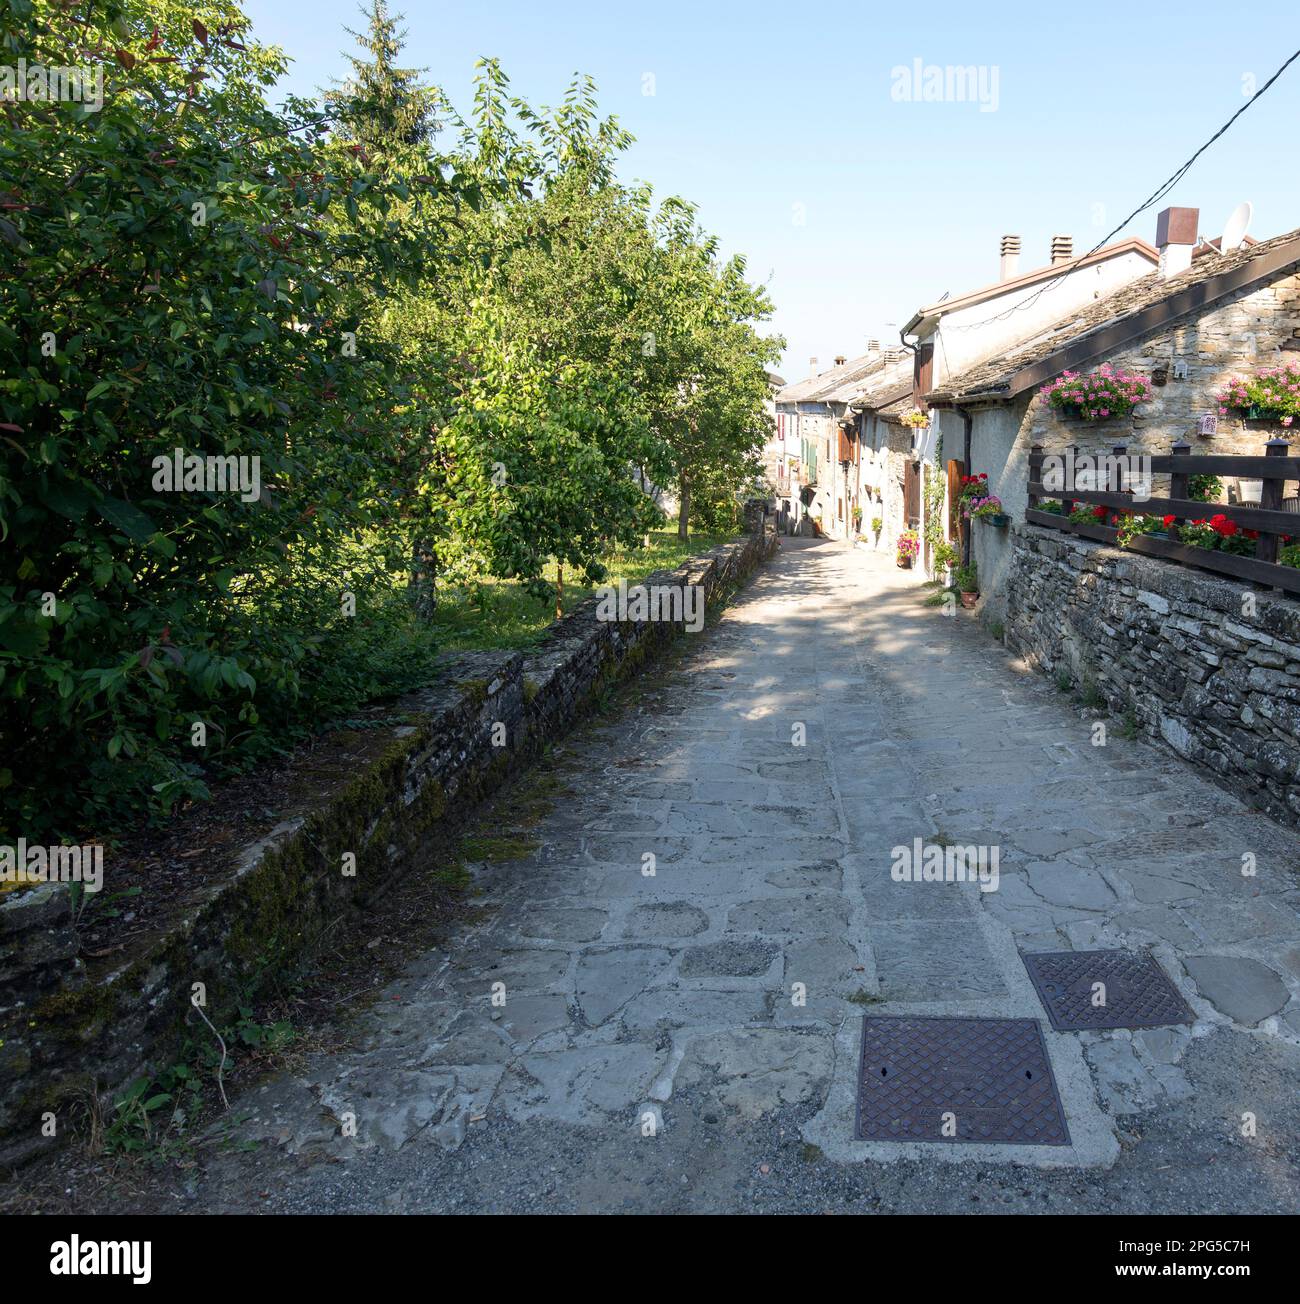 Lunigiana, Italy - August 12, 2020: rural area in Lunigiana along the via Francigena pilgrimage route Stock Photo